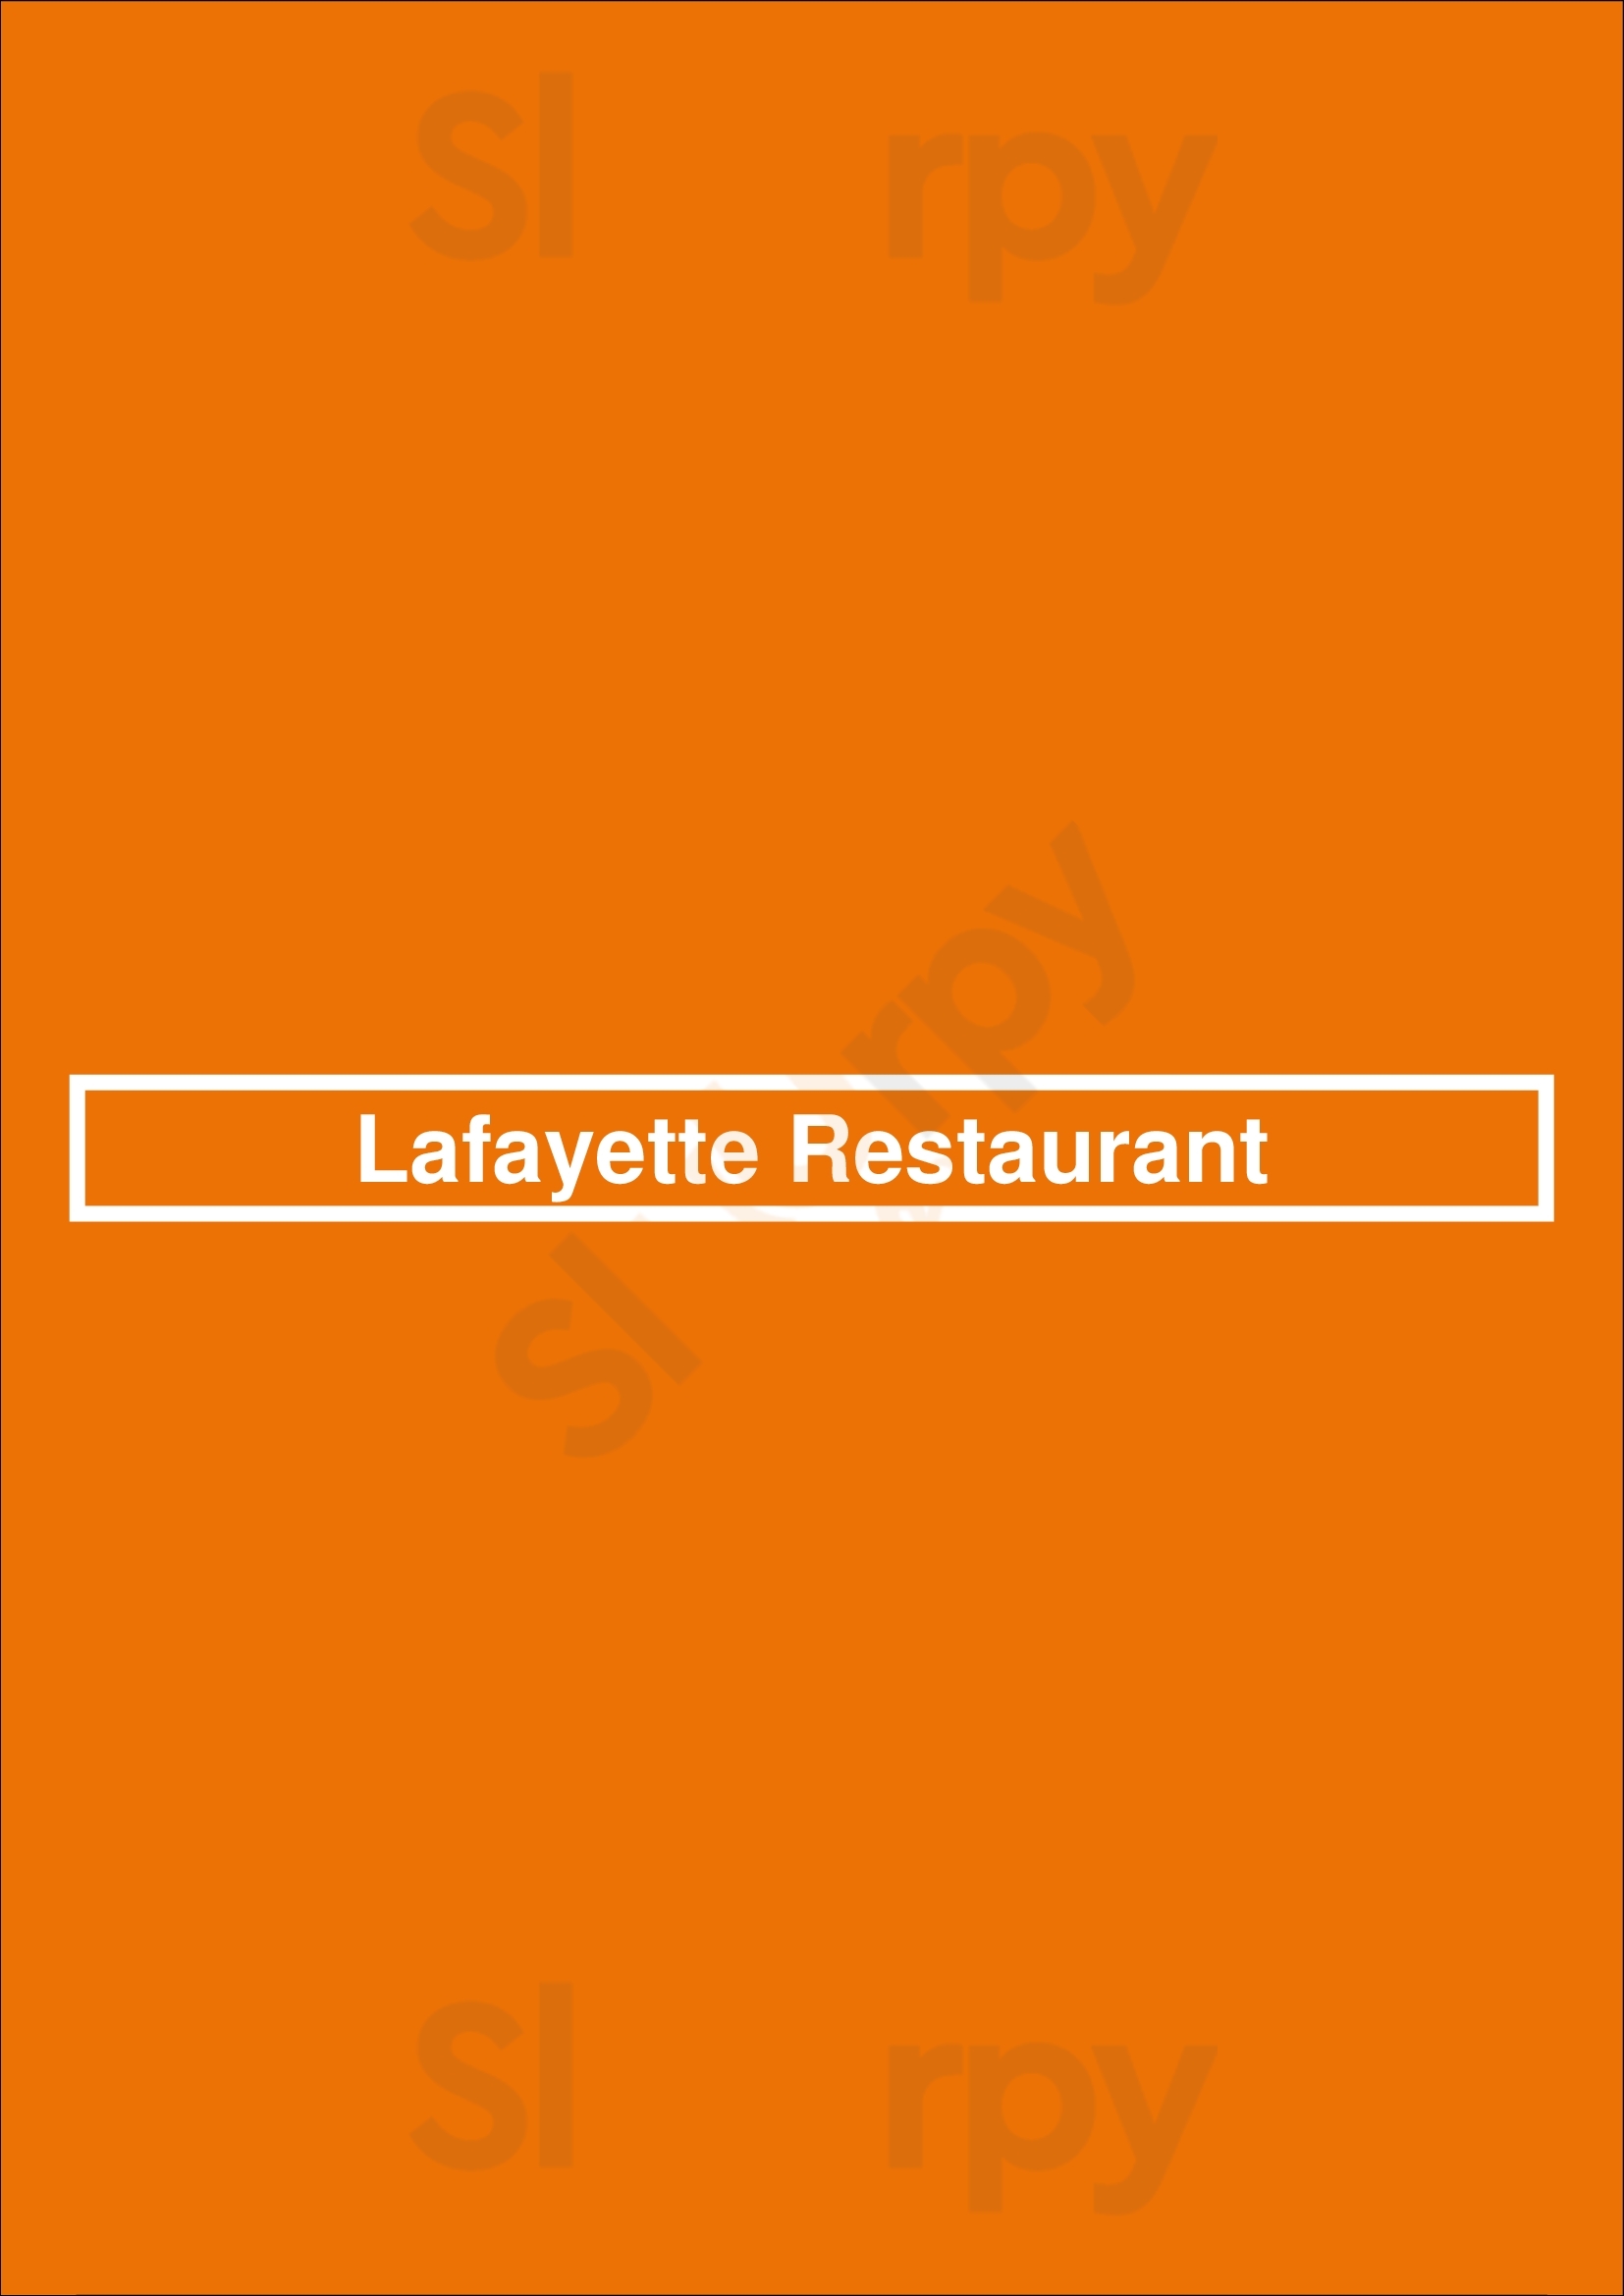 Lafayette Restaurant Washington DC Menu - 1